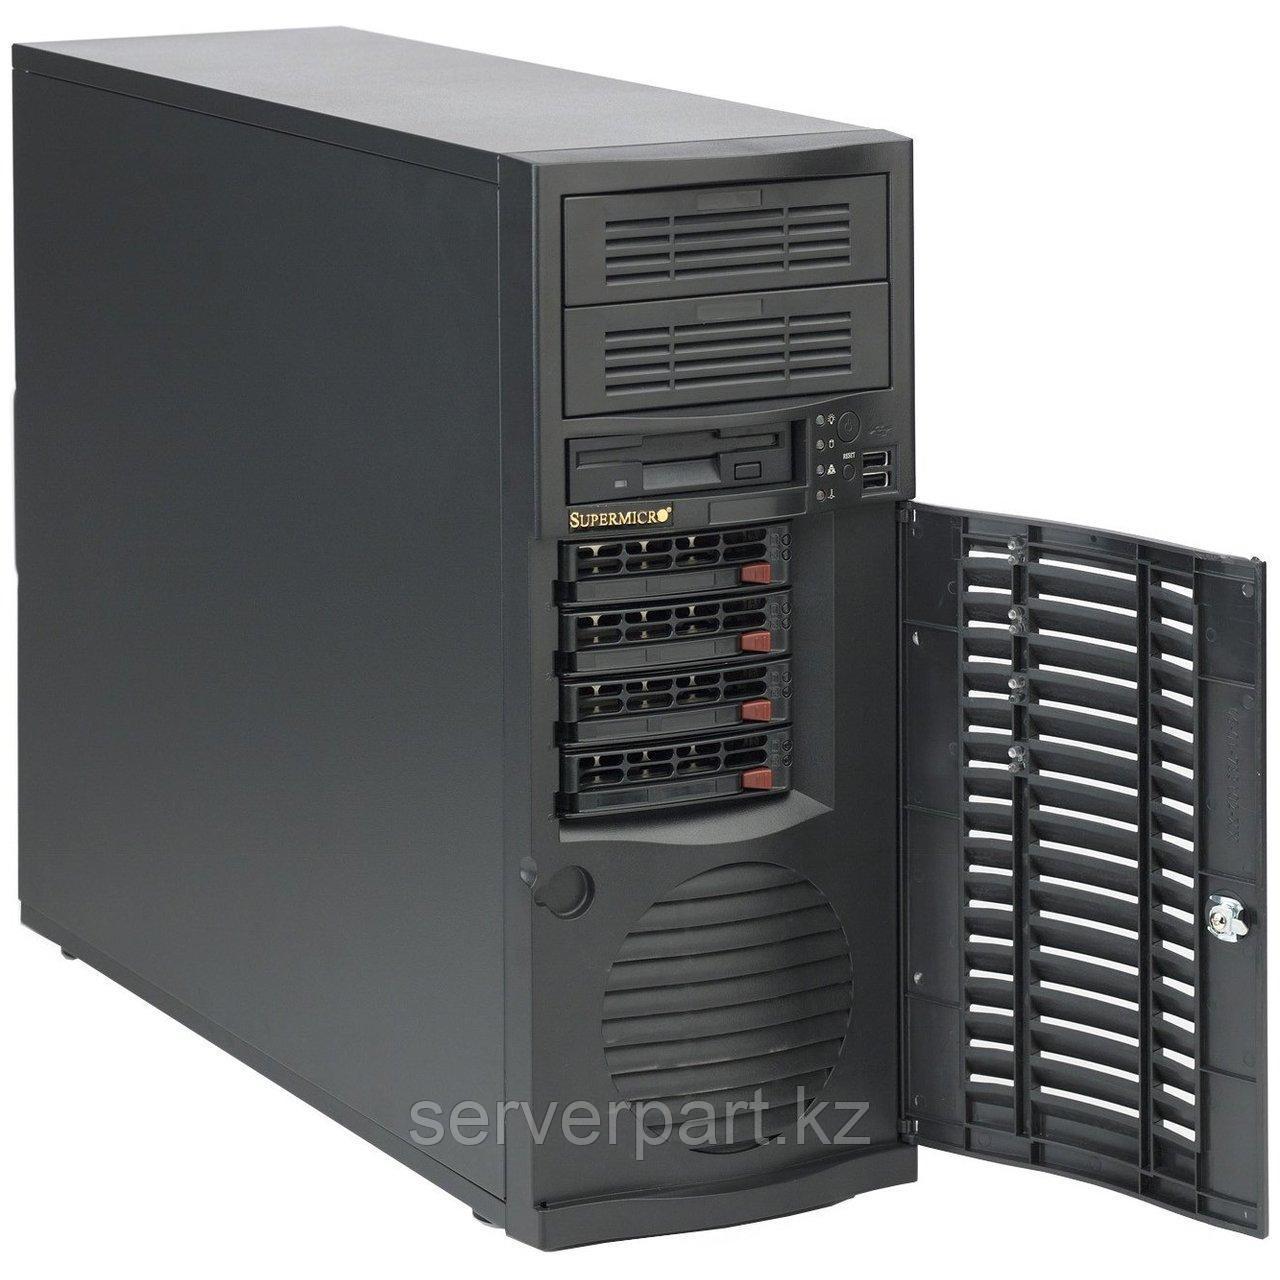 Сервер Supermicro 733T-500B\X10DRL-I Tower 4LFF/1х8-core Intel Xeon E5-2667v3 3.2GHz/no RAM/no HDD